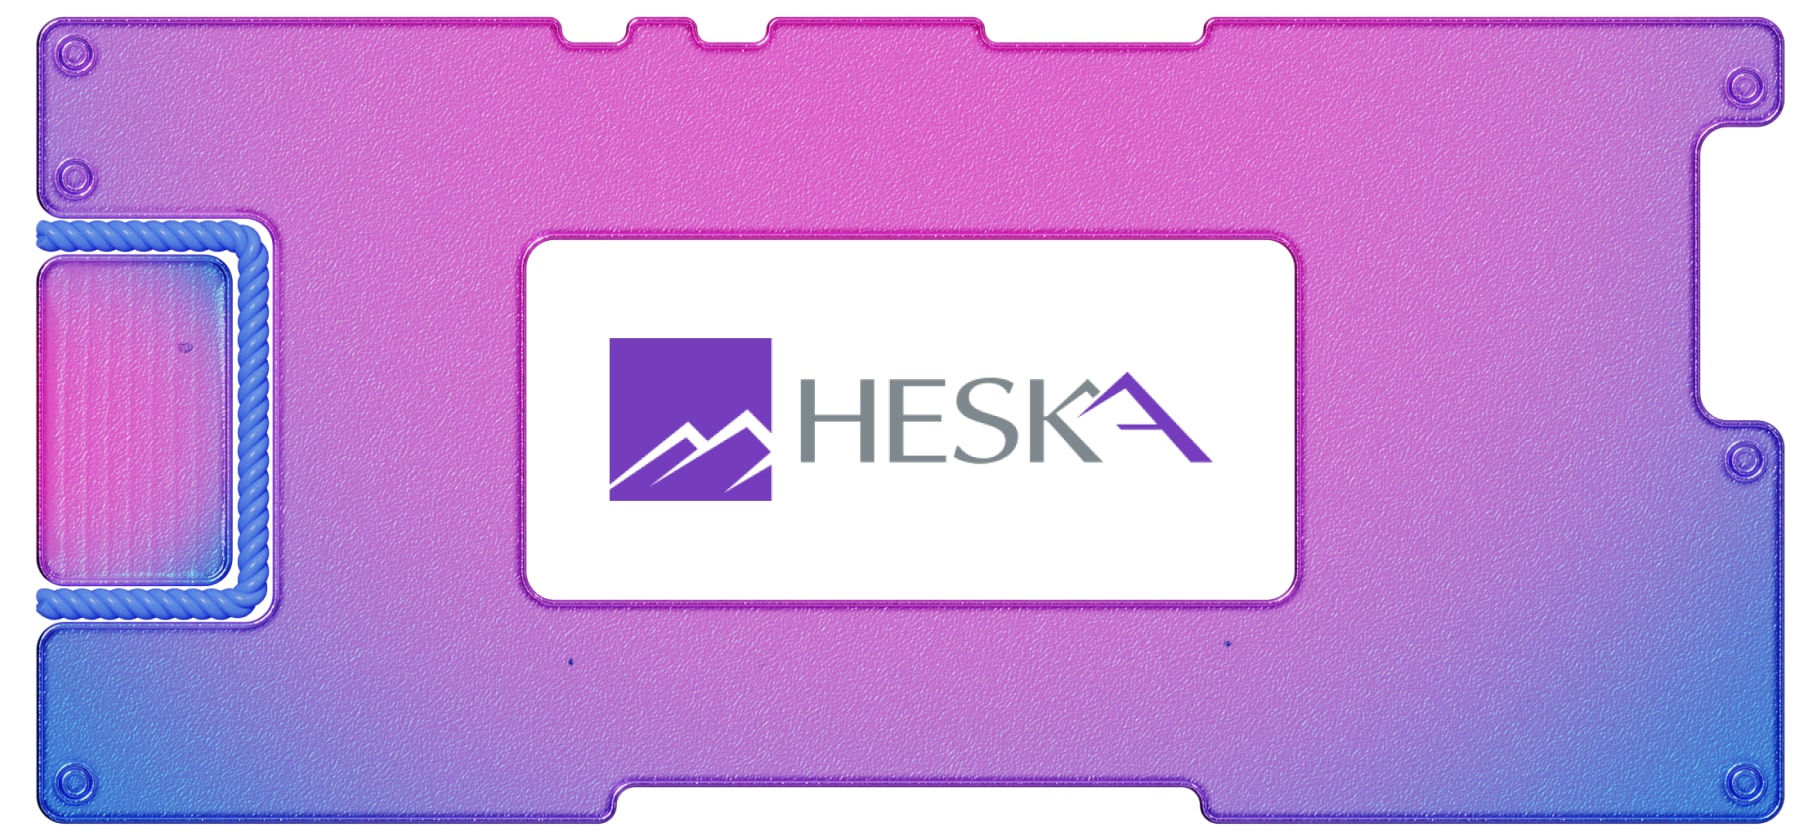 Котаны и песели: как устроен бизнес Heska